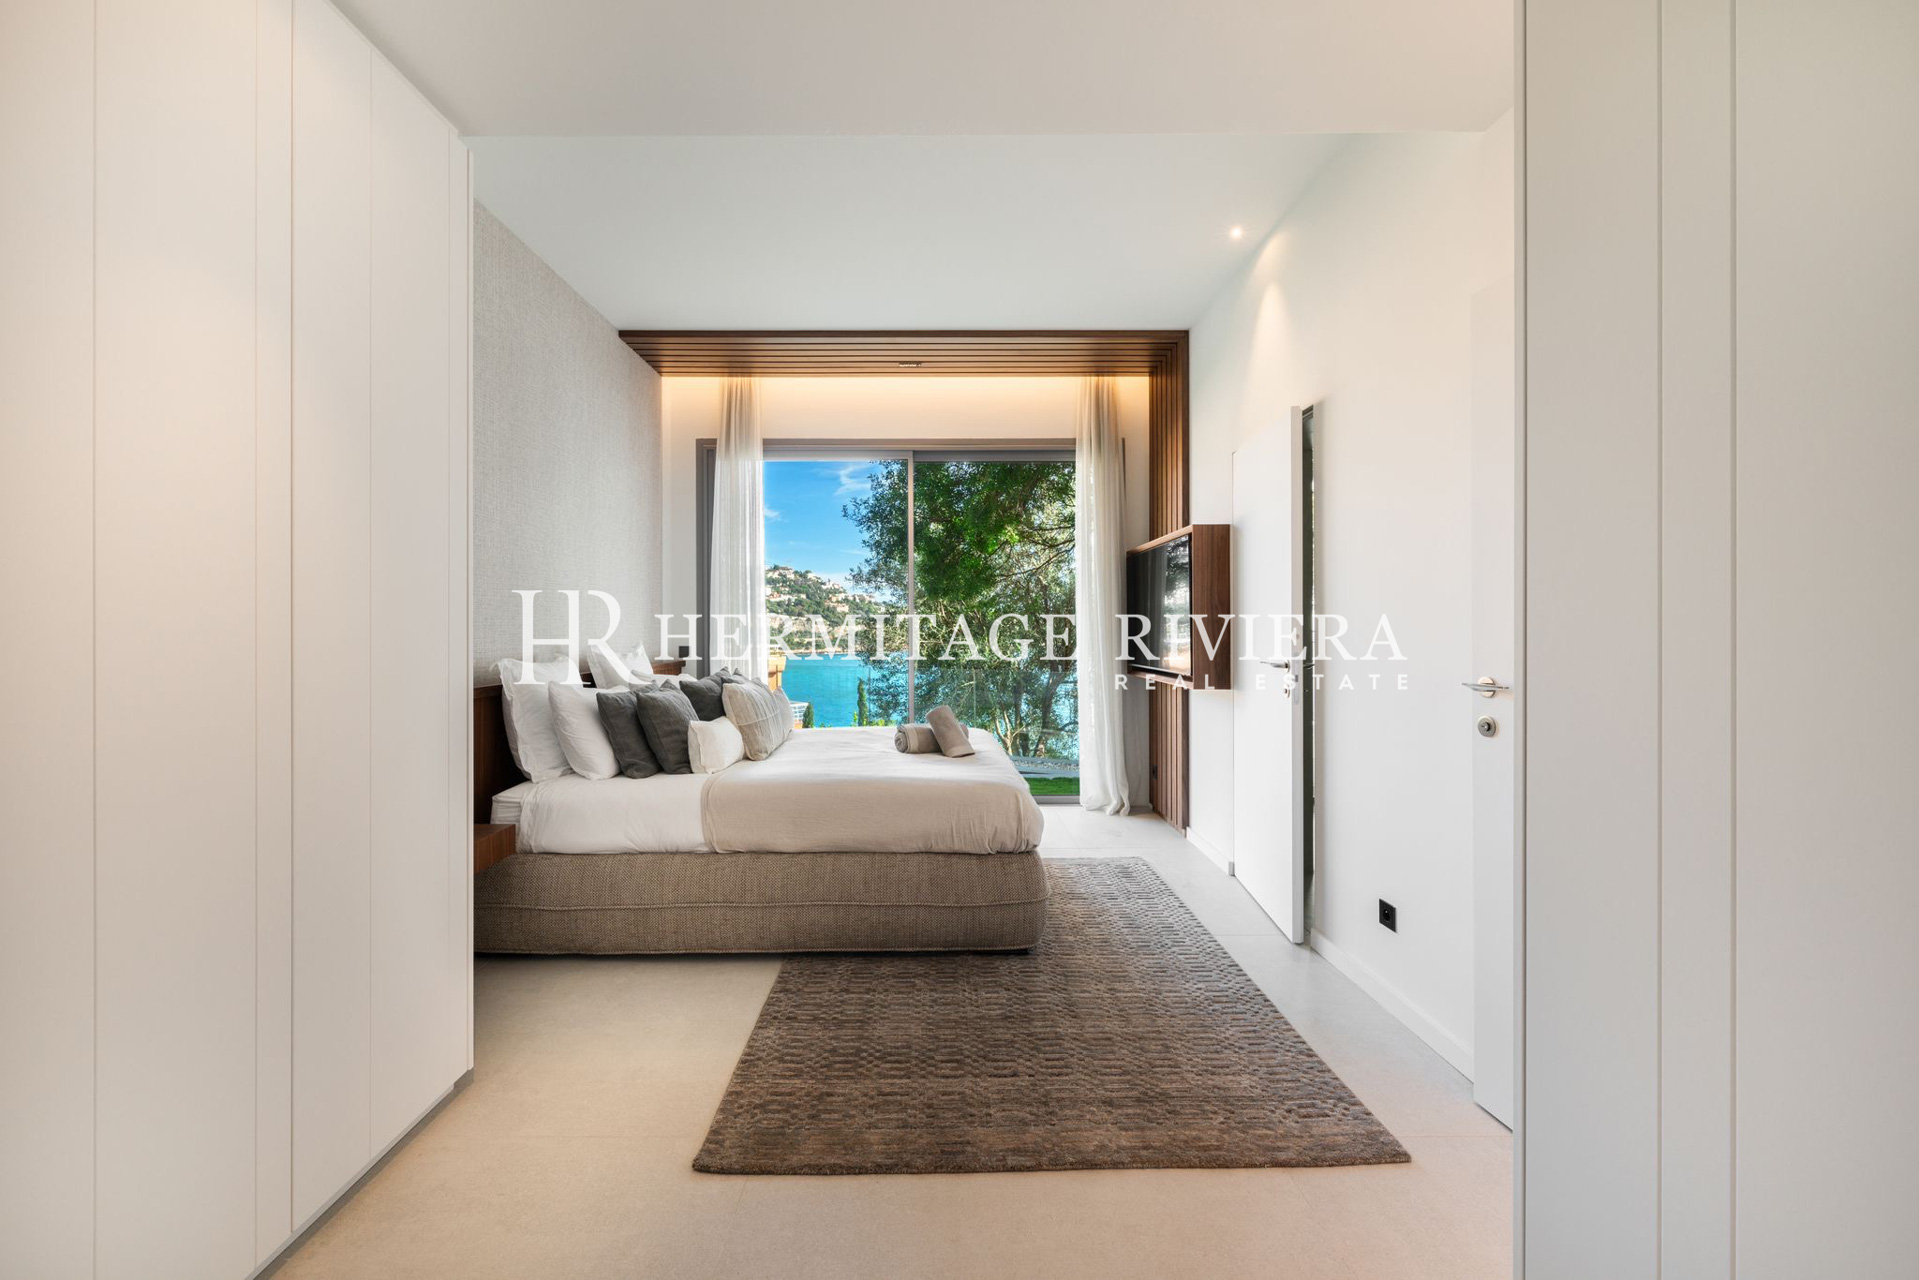 Recently renovated contemporary villa near Monaco (image 10)